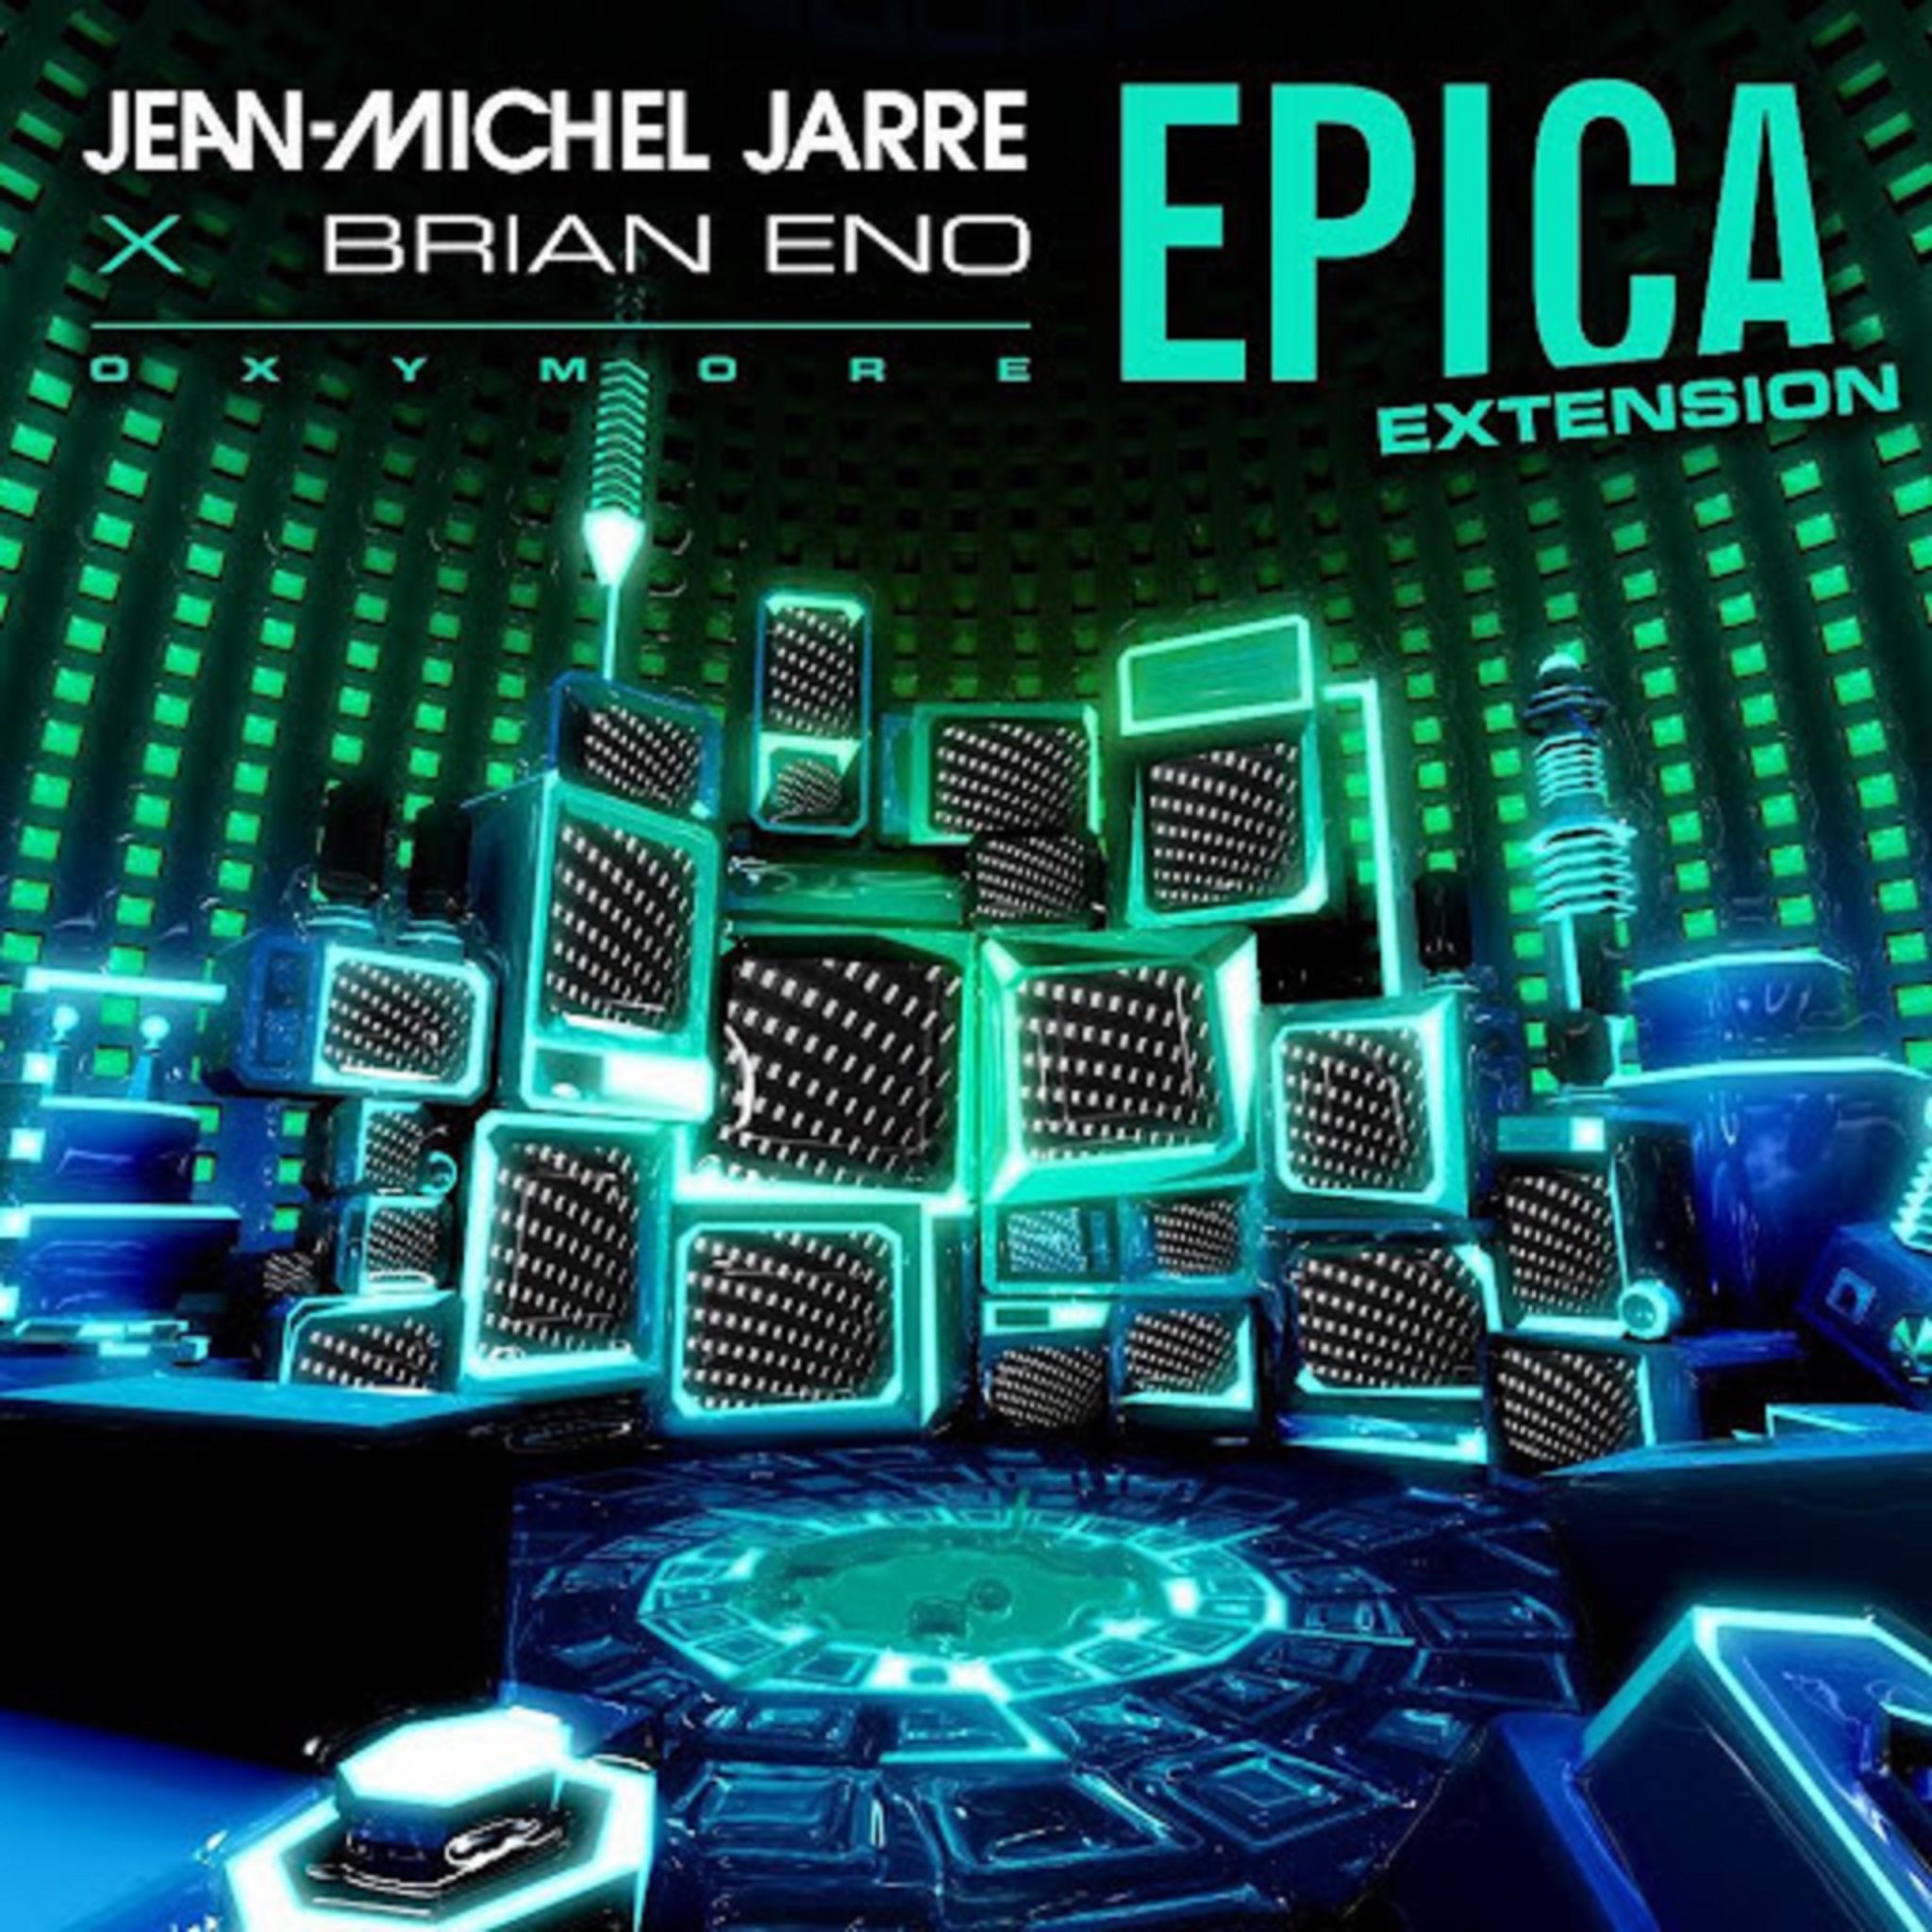 Jean-Michel Jarre and Brian Eno Release "EPICA EXTENSION" Today